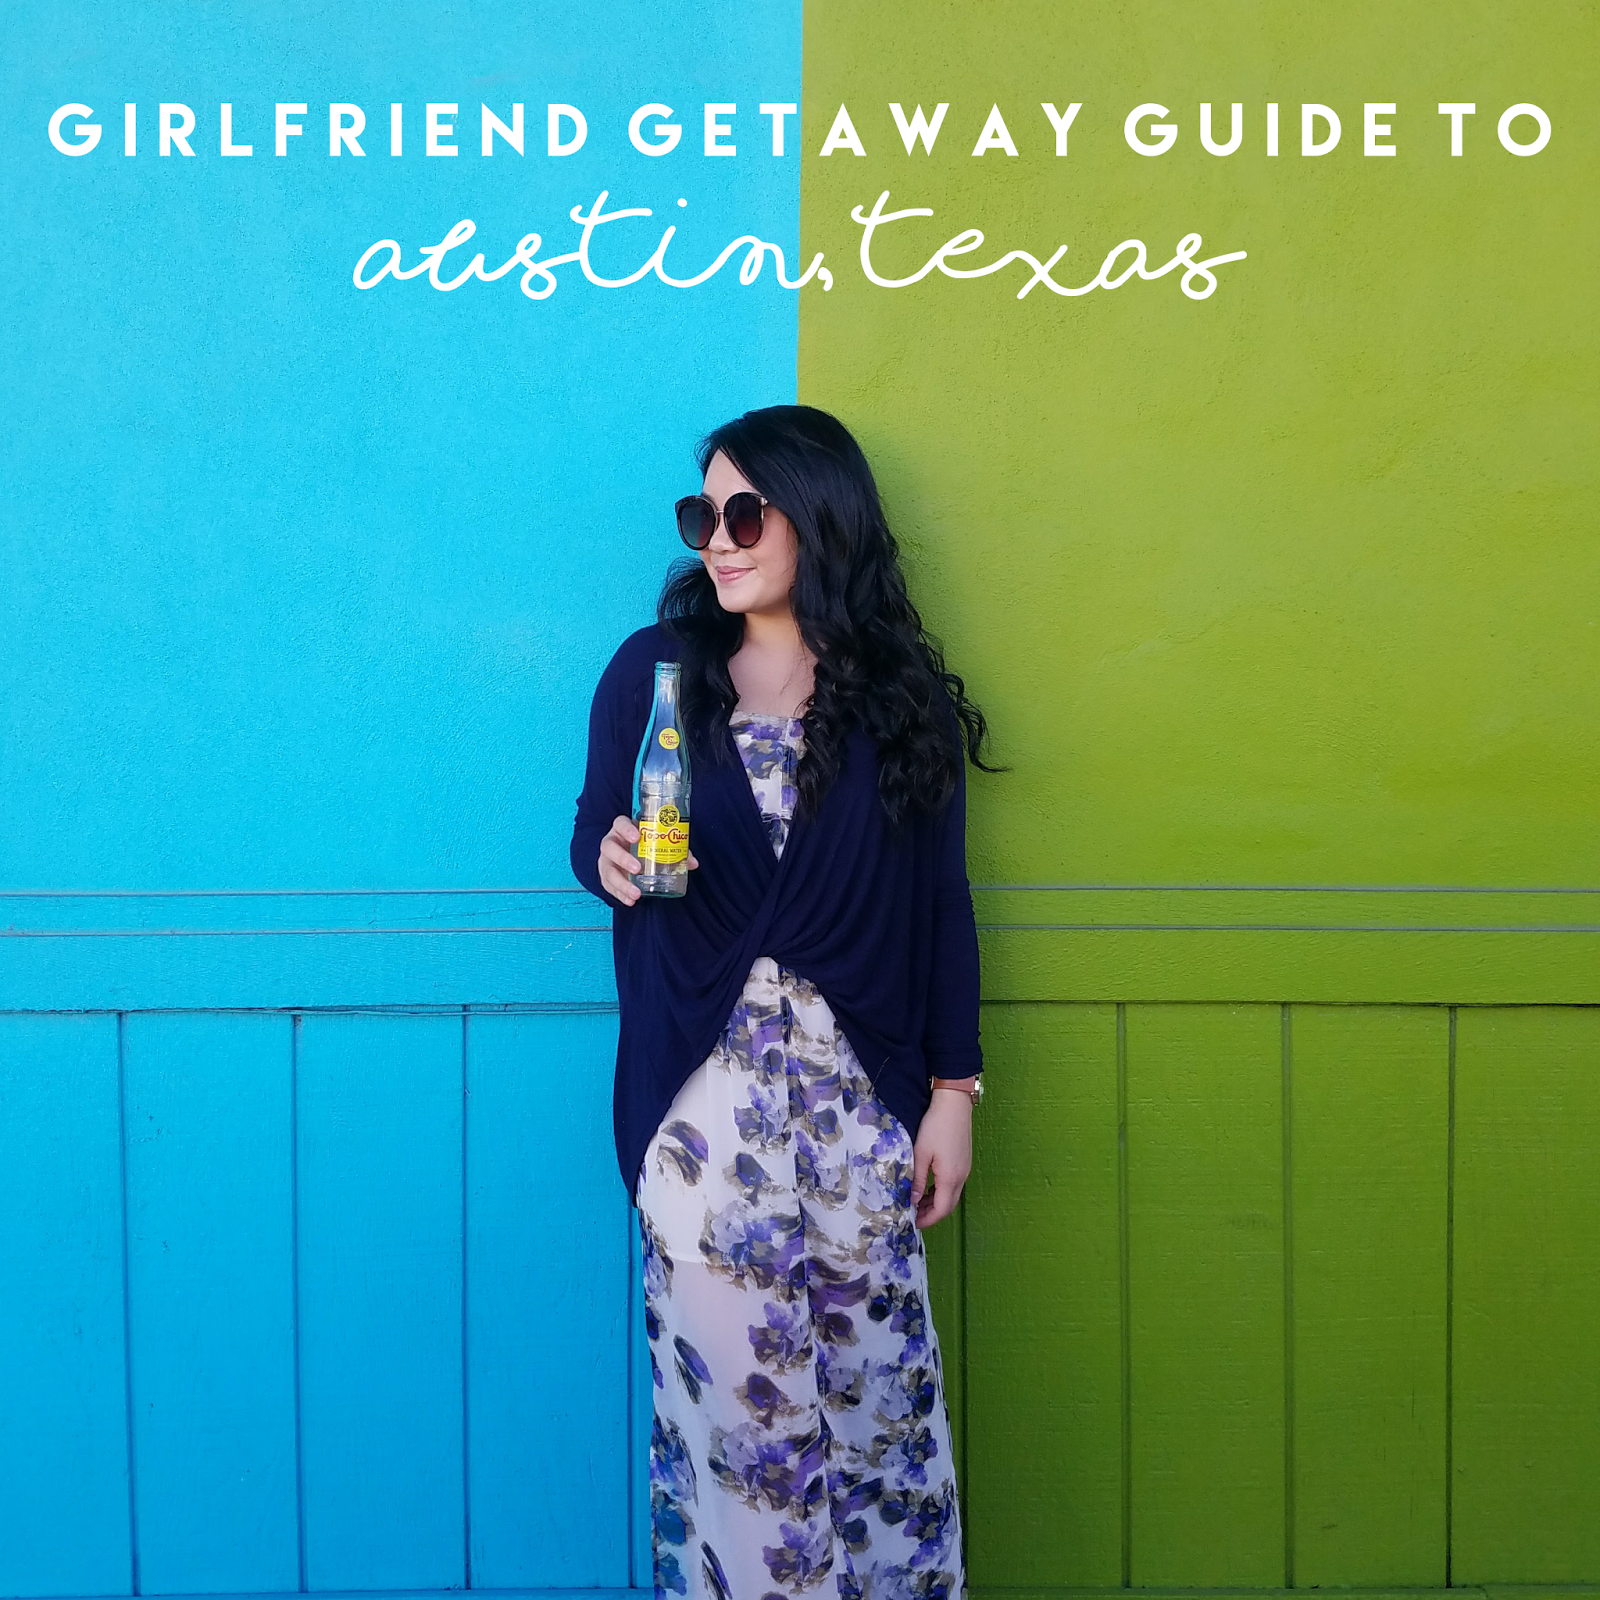 a local's girlfriend getaway guide to austin, tx